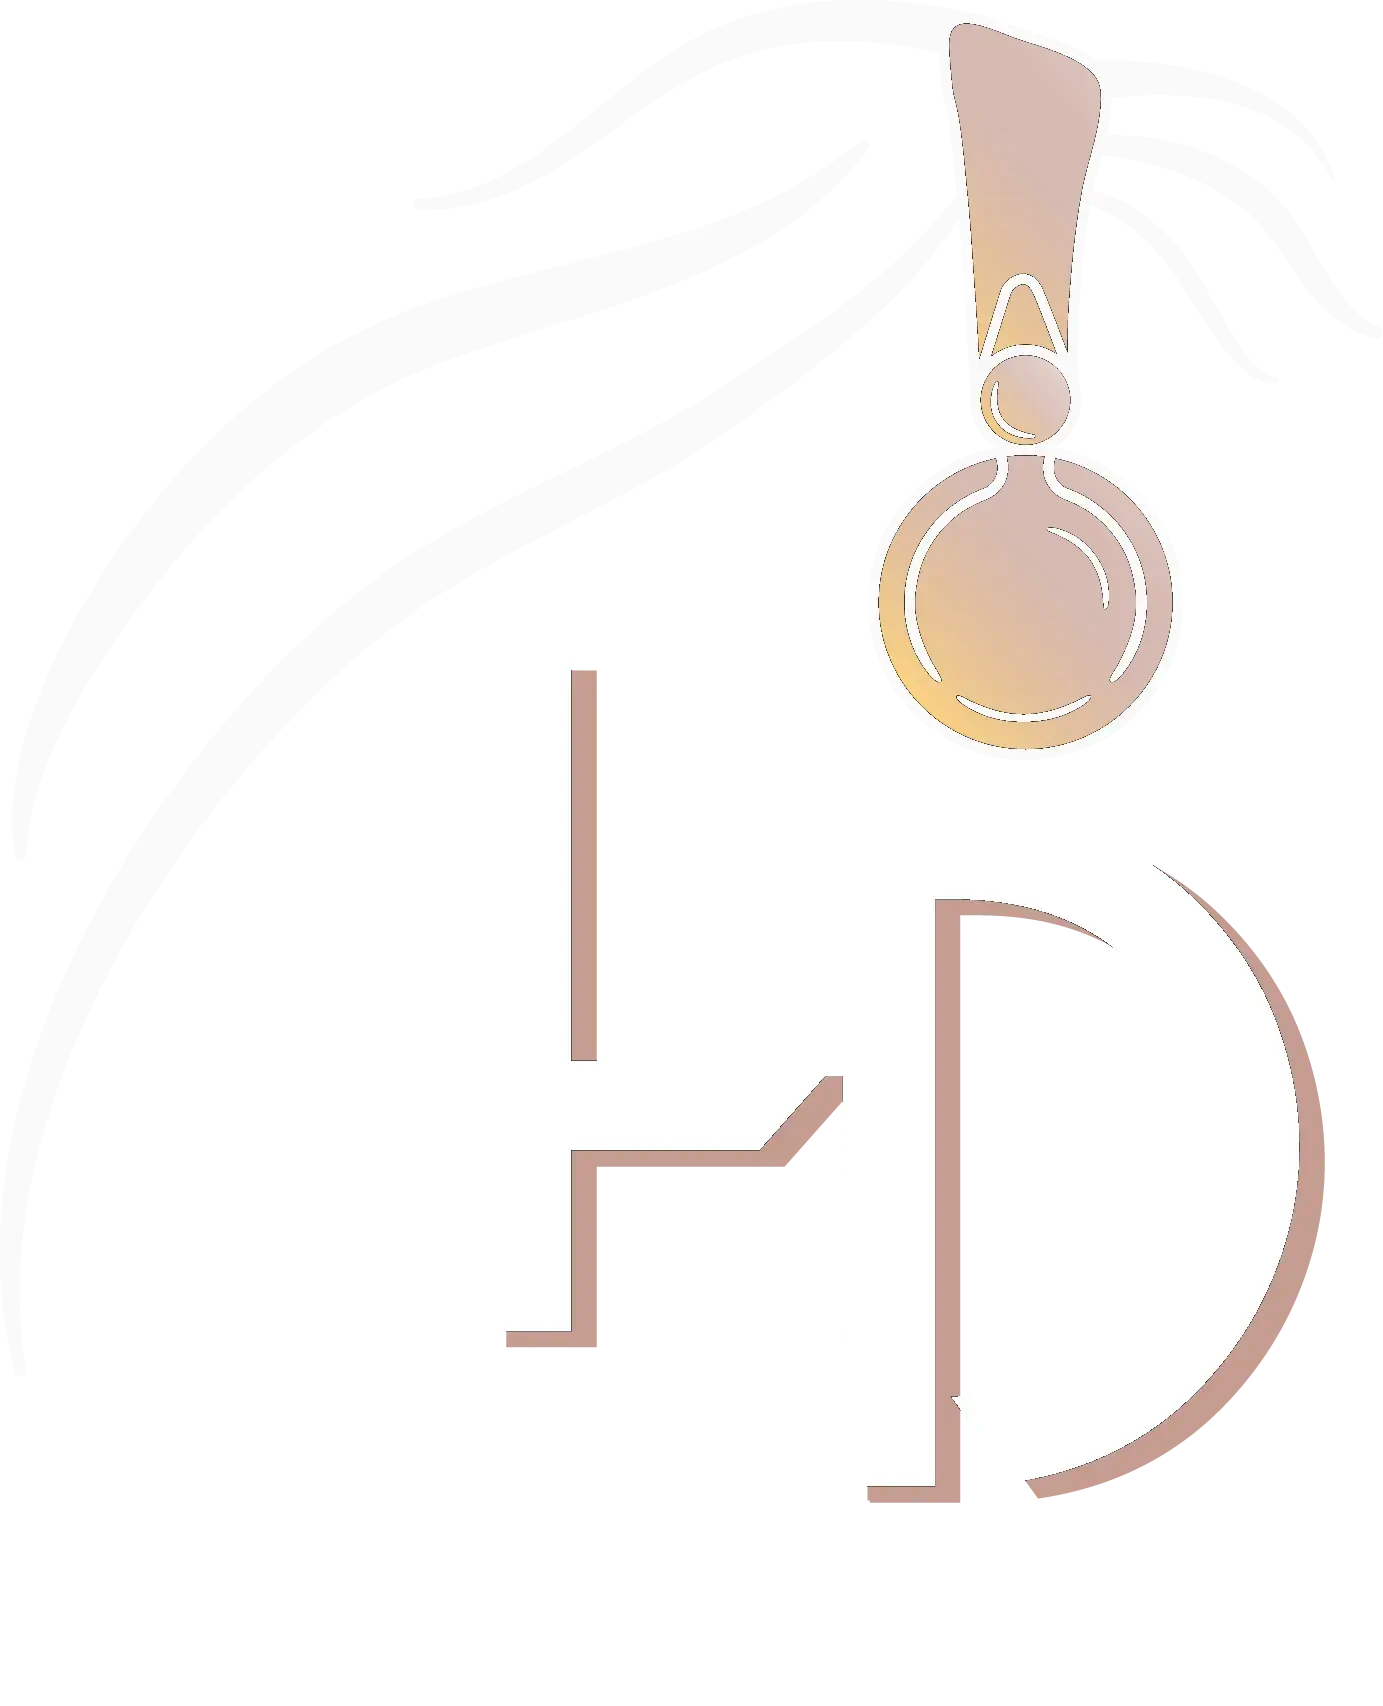 A hair salon logo featuring a pendant motif.